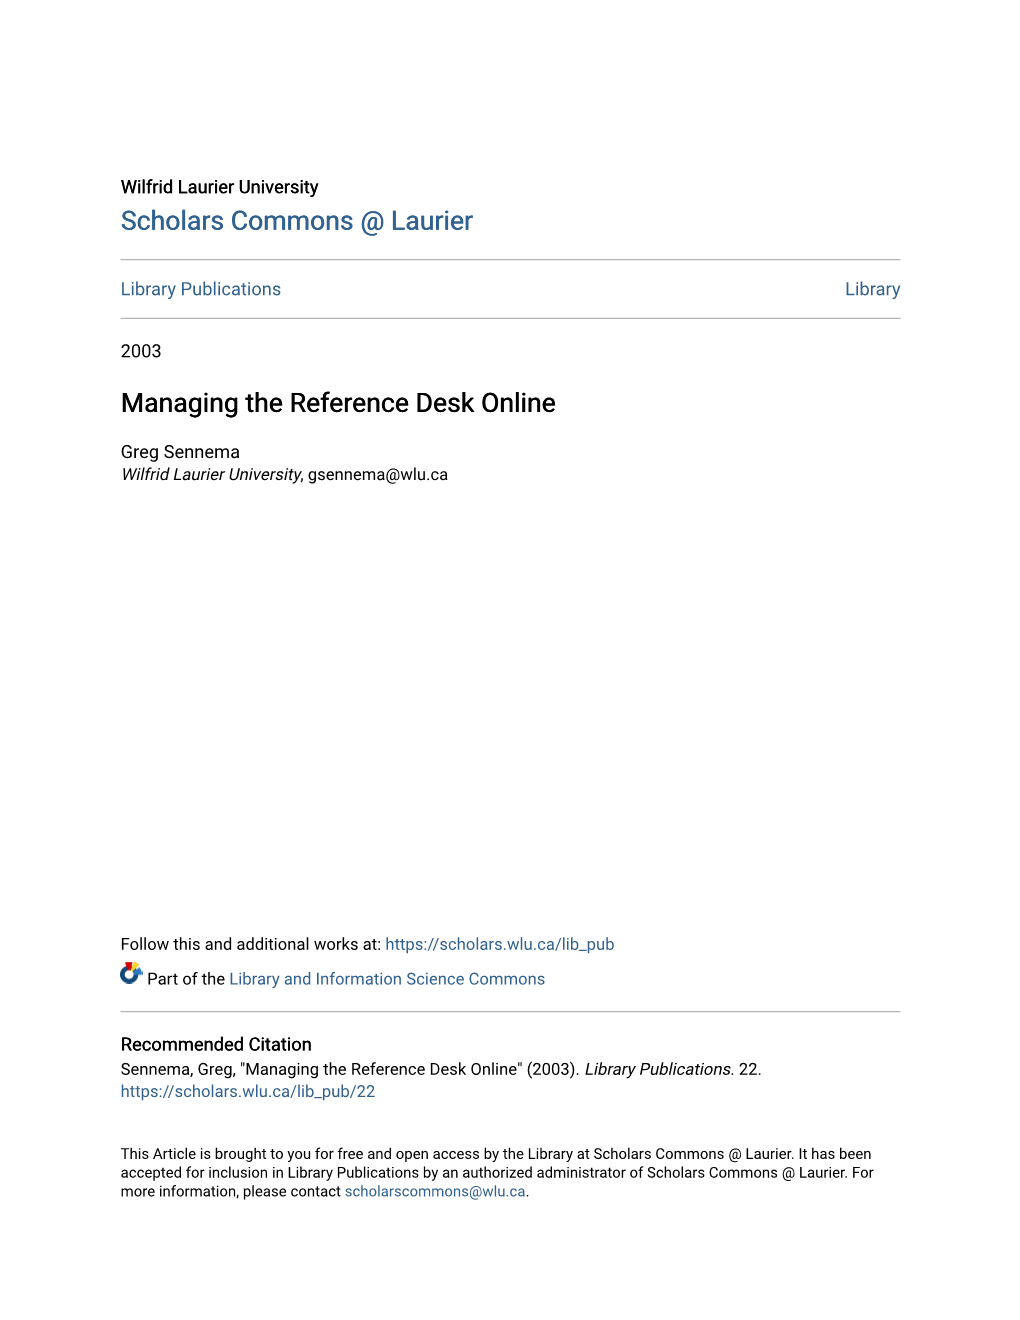 Managing the Reference Desk Online